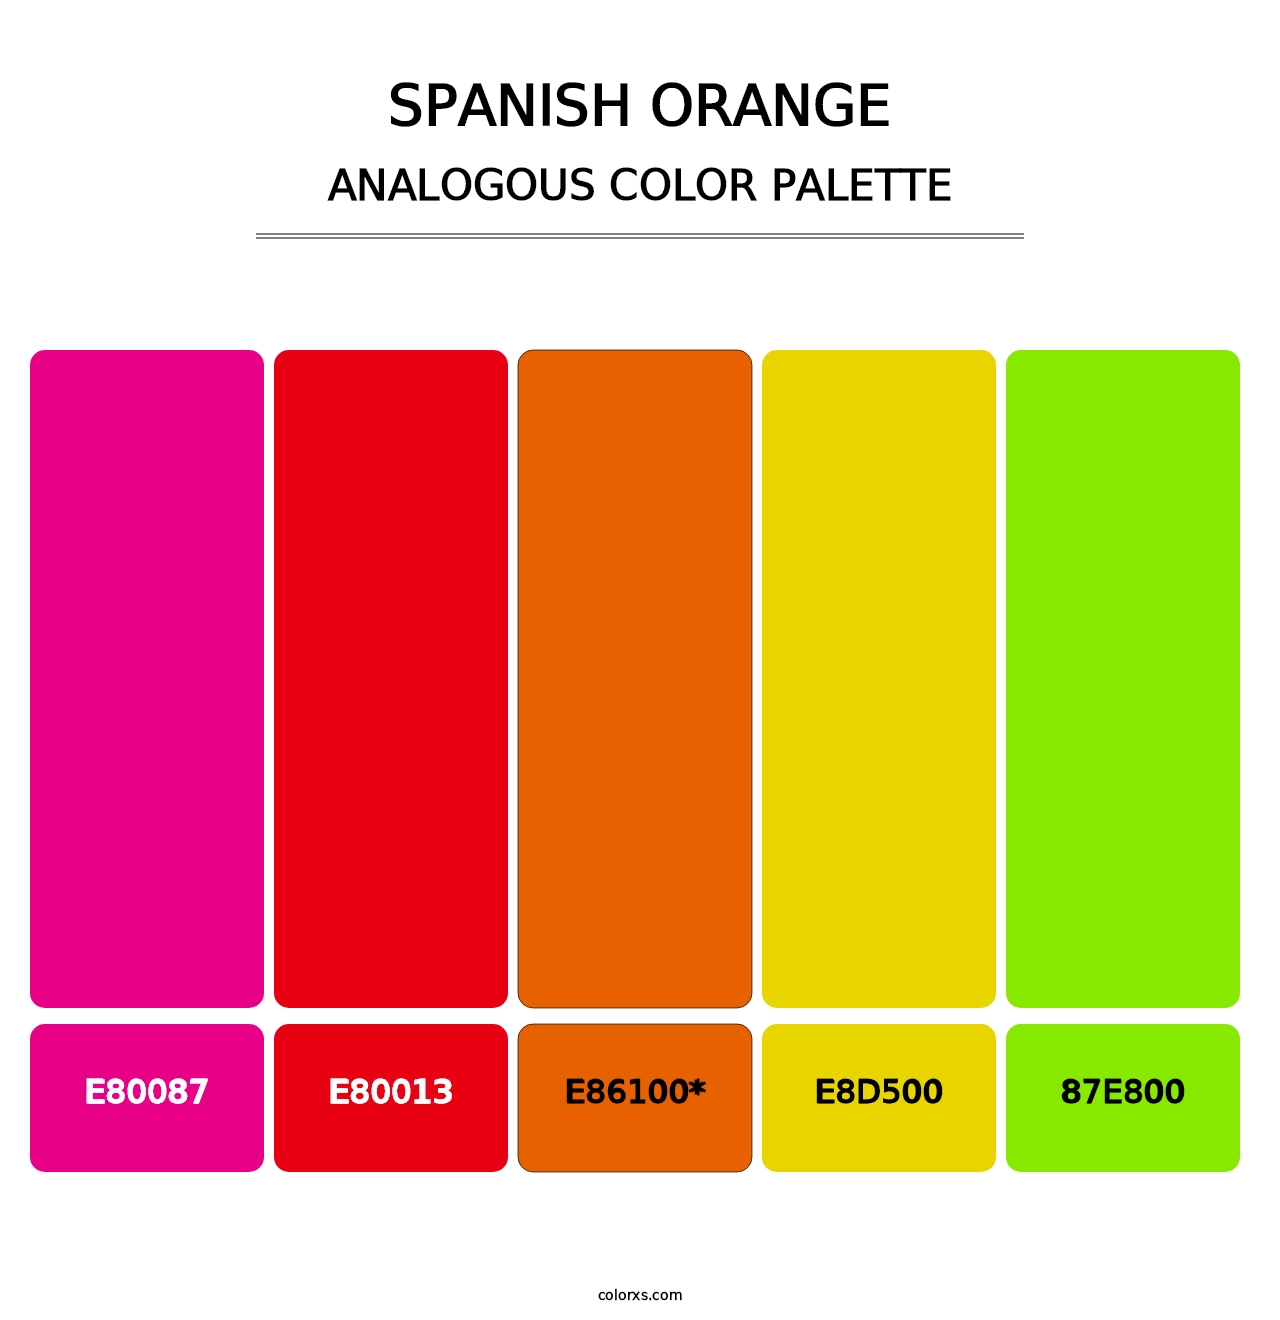 Spanish Orange - Analogous Color Palette